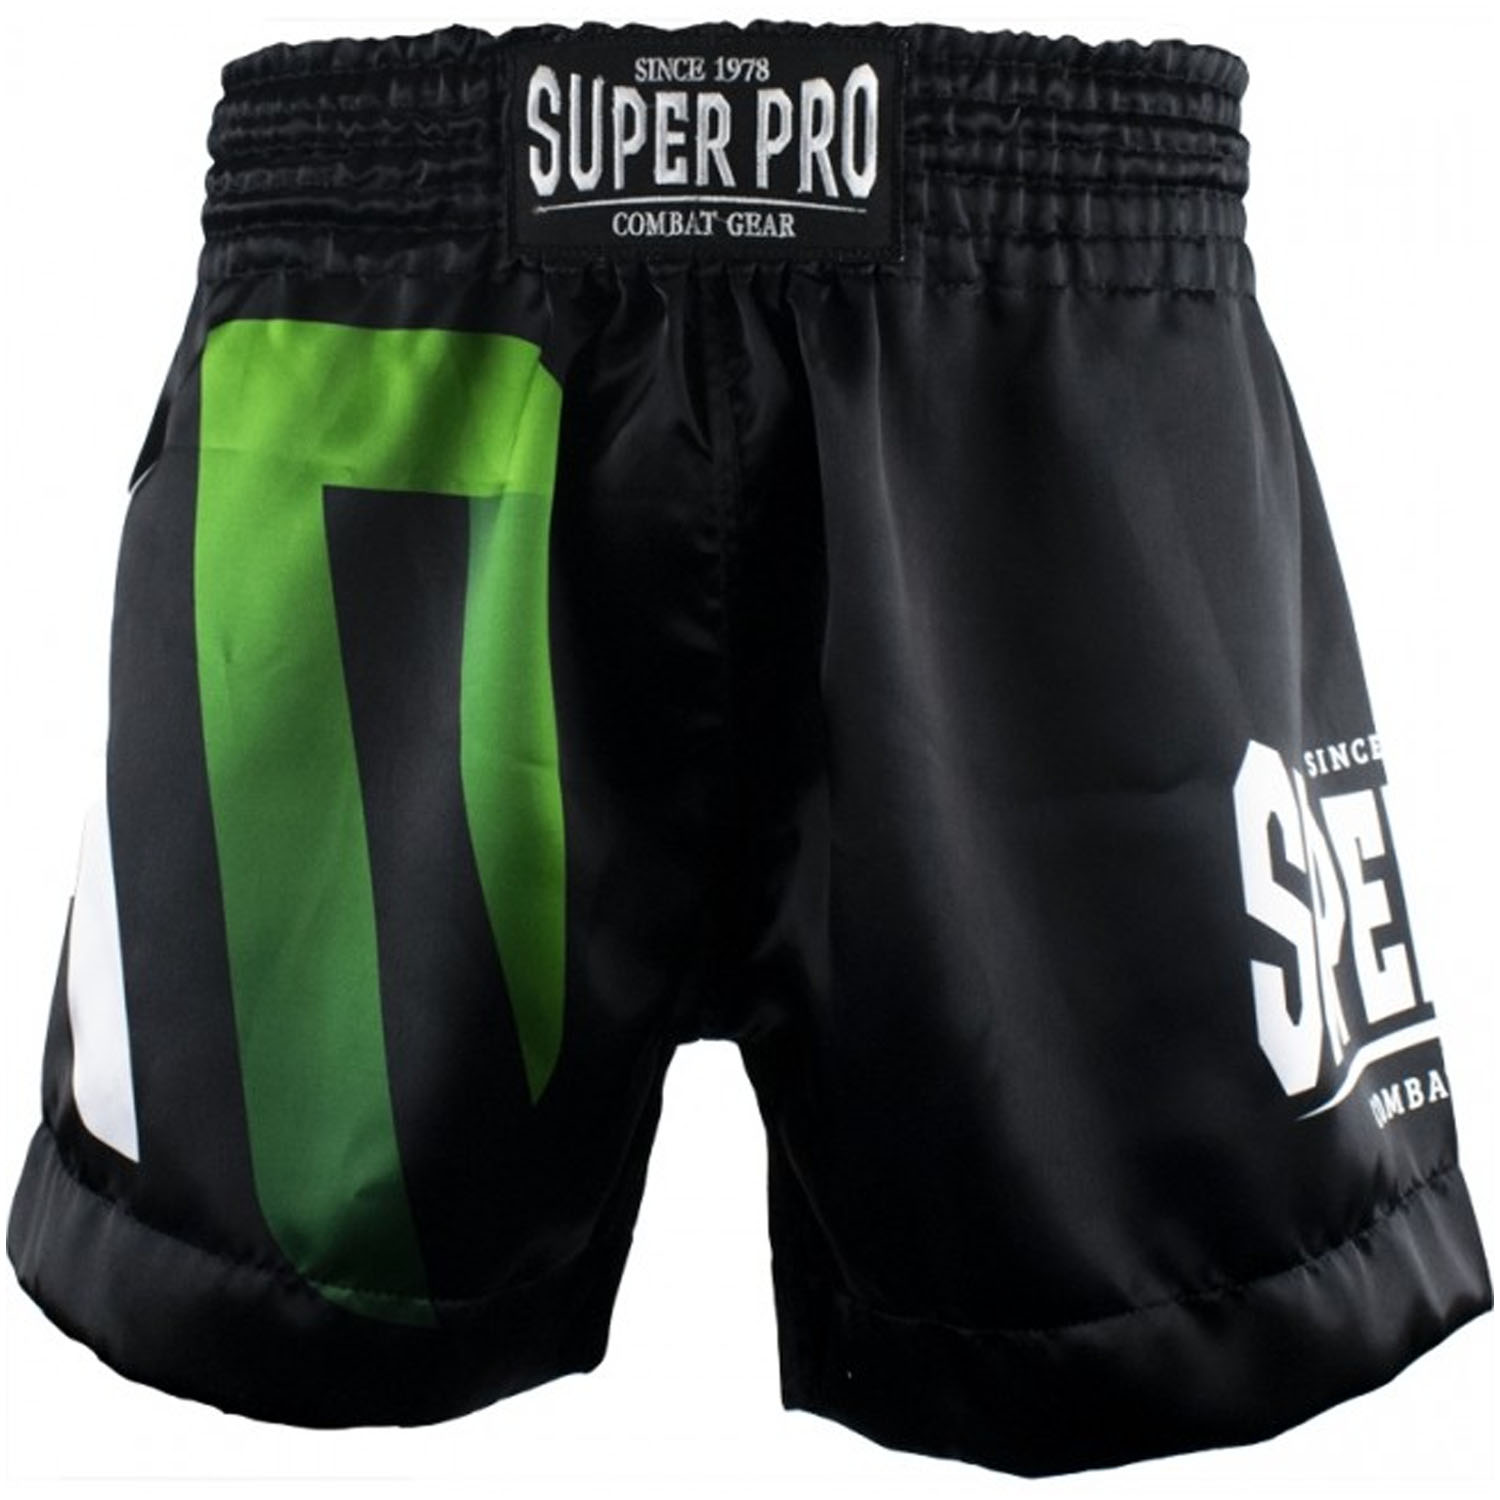 Super Pro Muay Thai Shorts, No Mercy, black, M